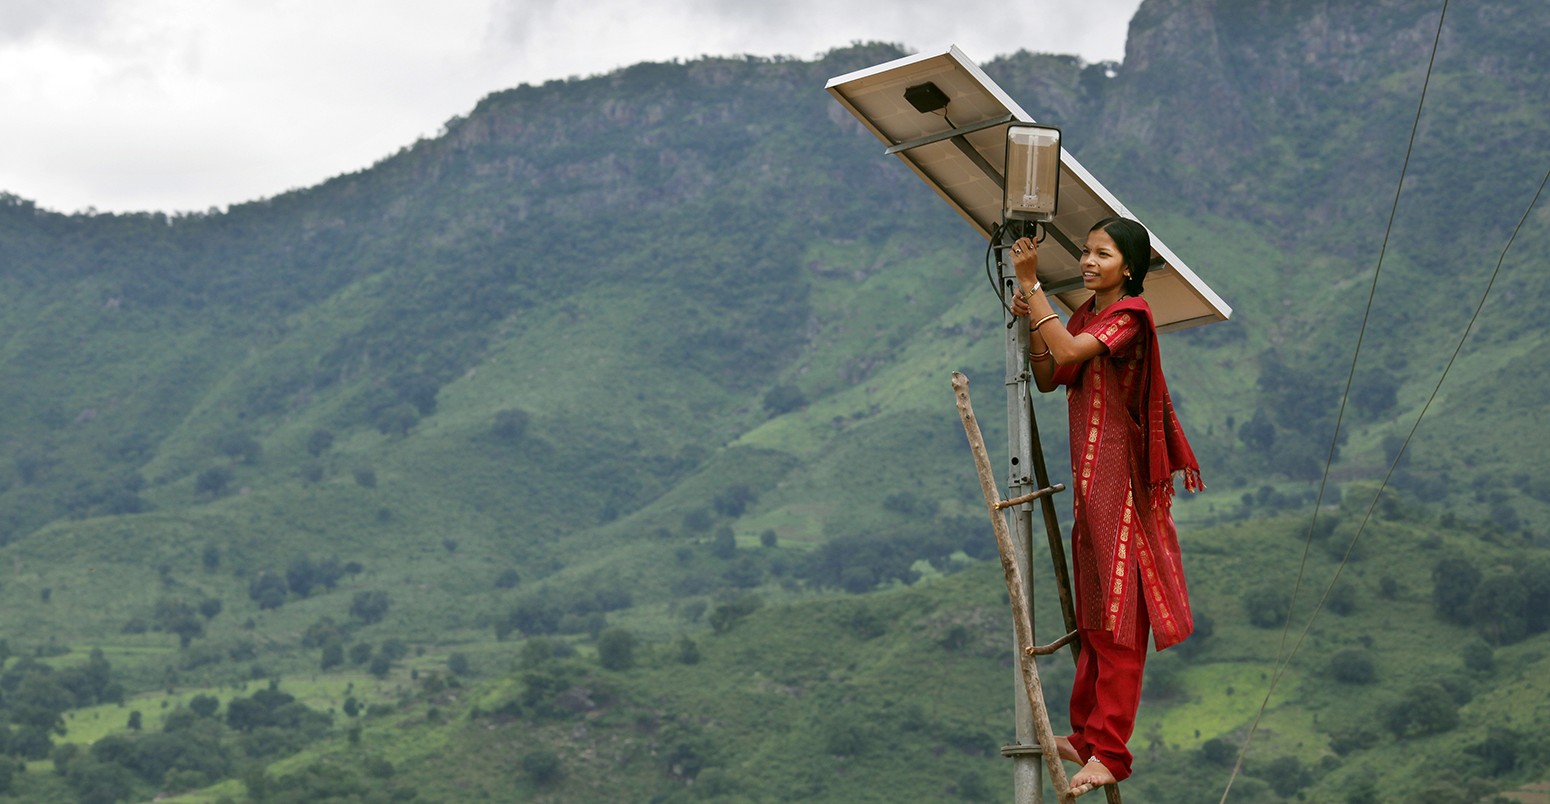 Meenakshi Dewan tends to maintenance work on the solar street lighting in her village of Tinginaput, India.